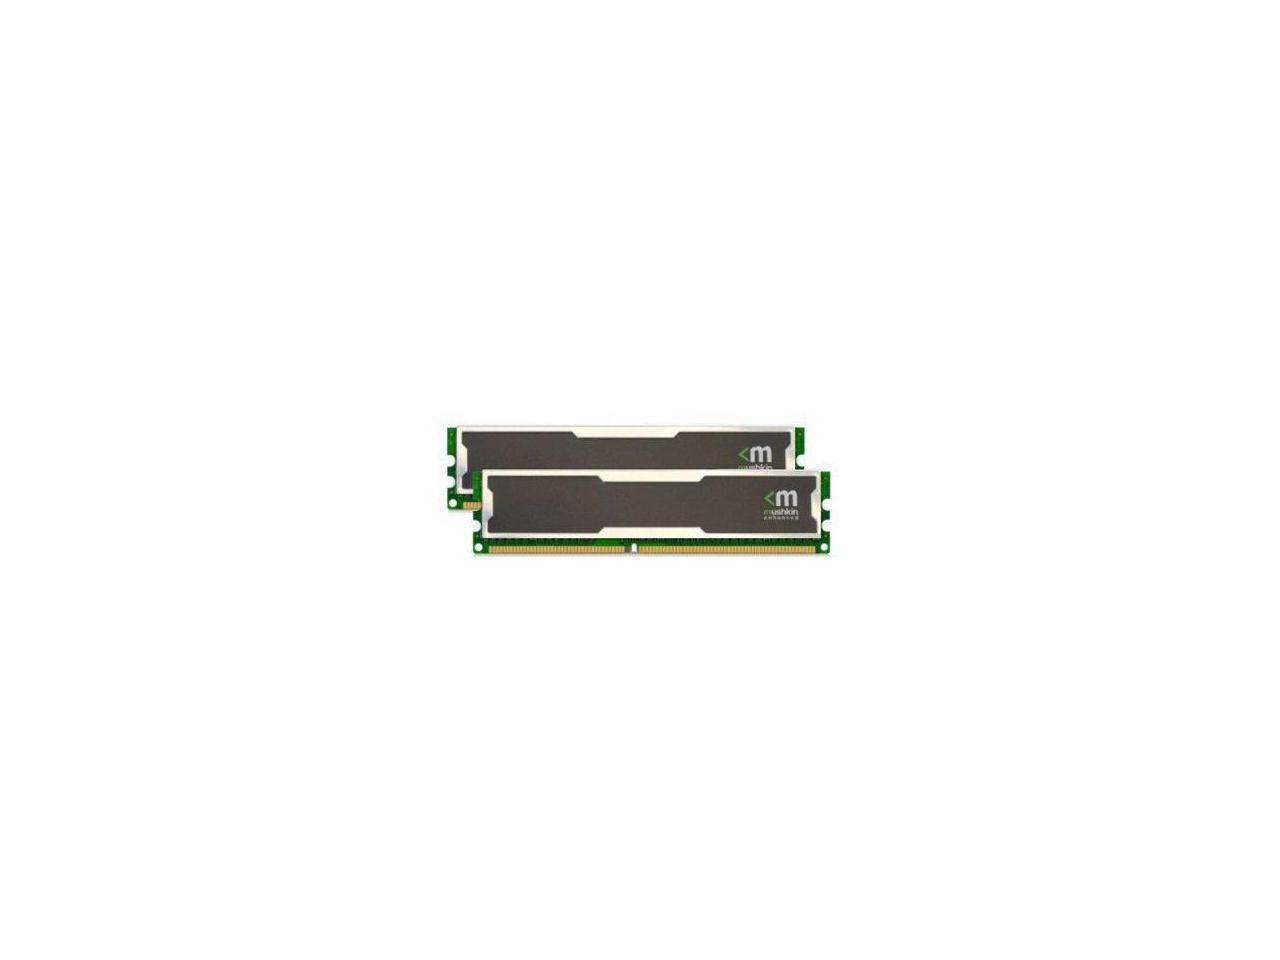 DDR-400MHz PC3200 Desktop RAM 2x1GB Mushkin Silverline 996754 2GB 